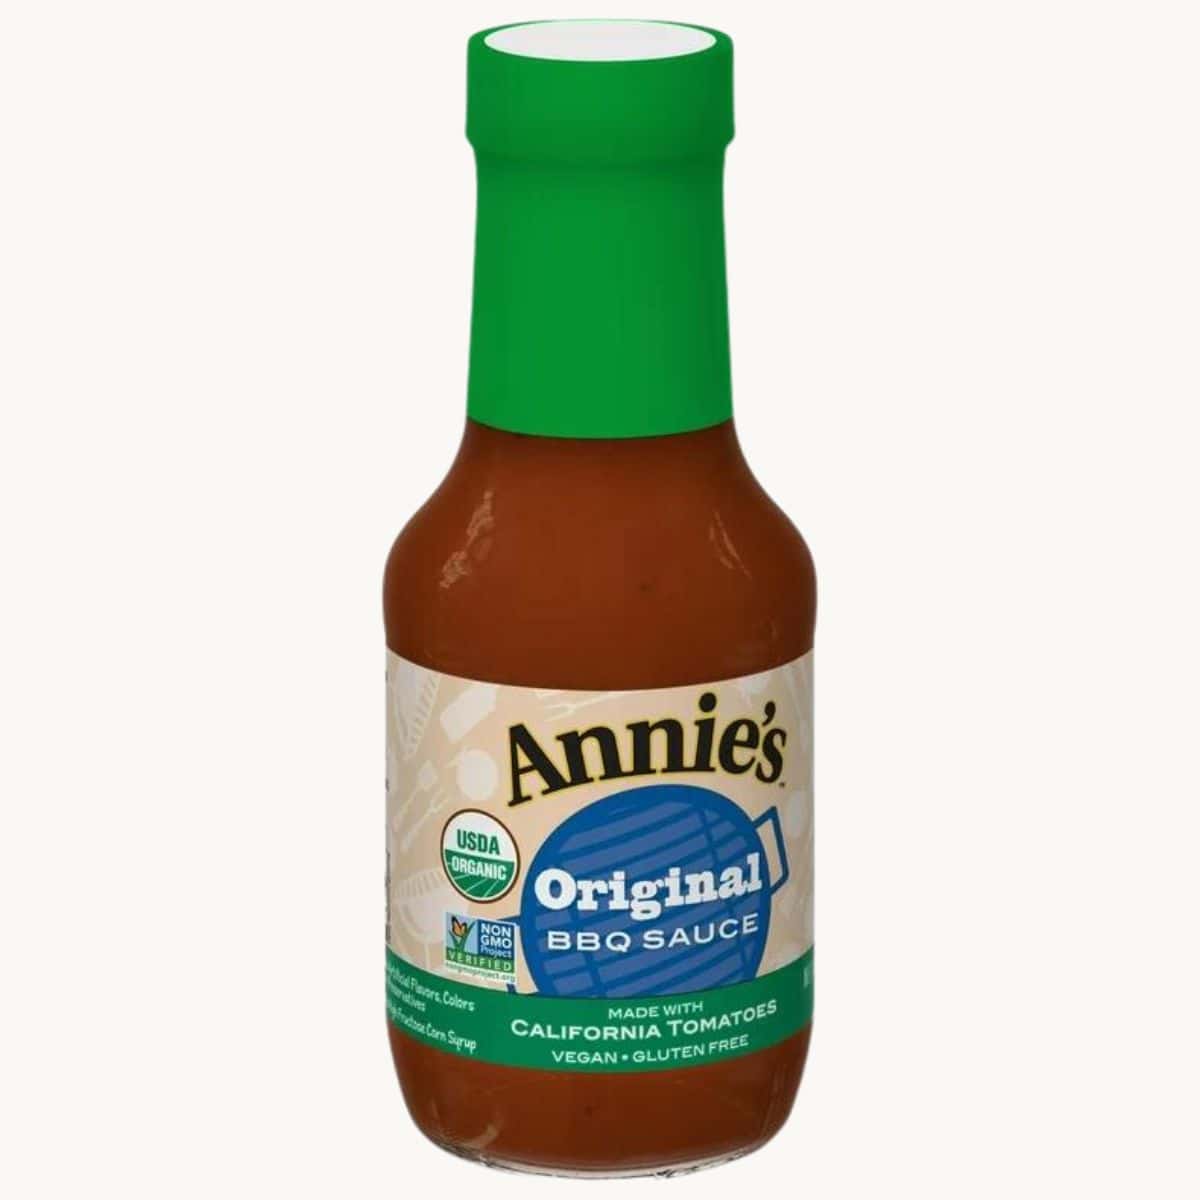 Annies BBQ Sauce.